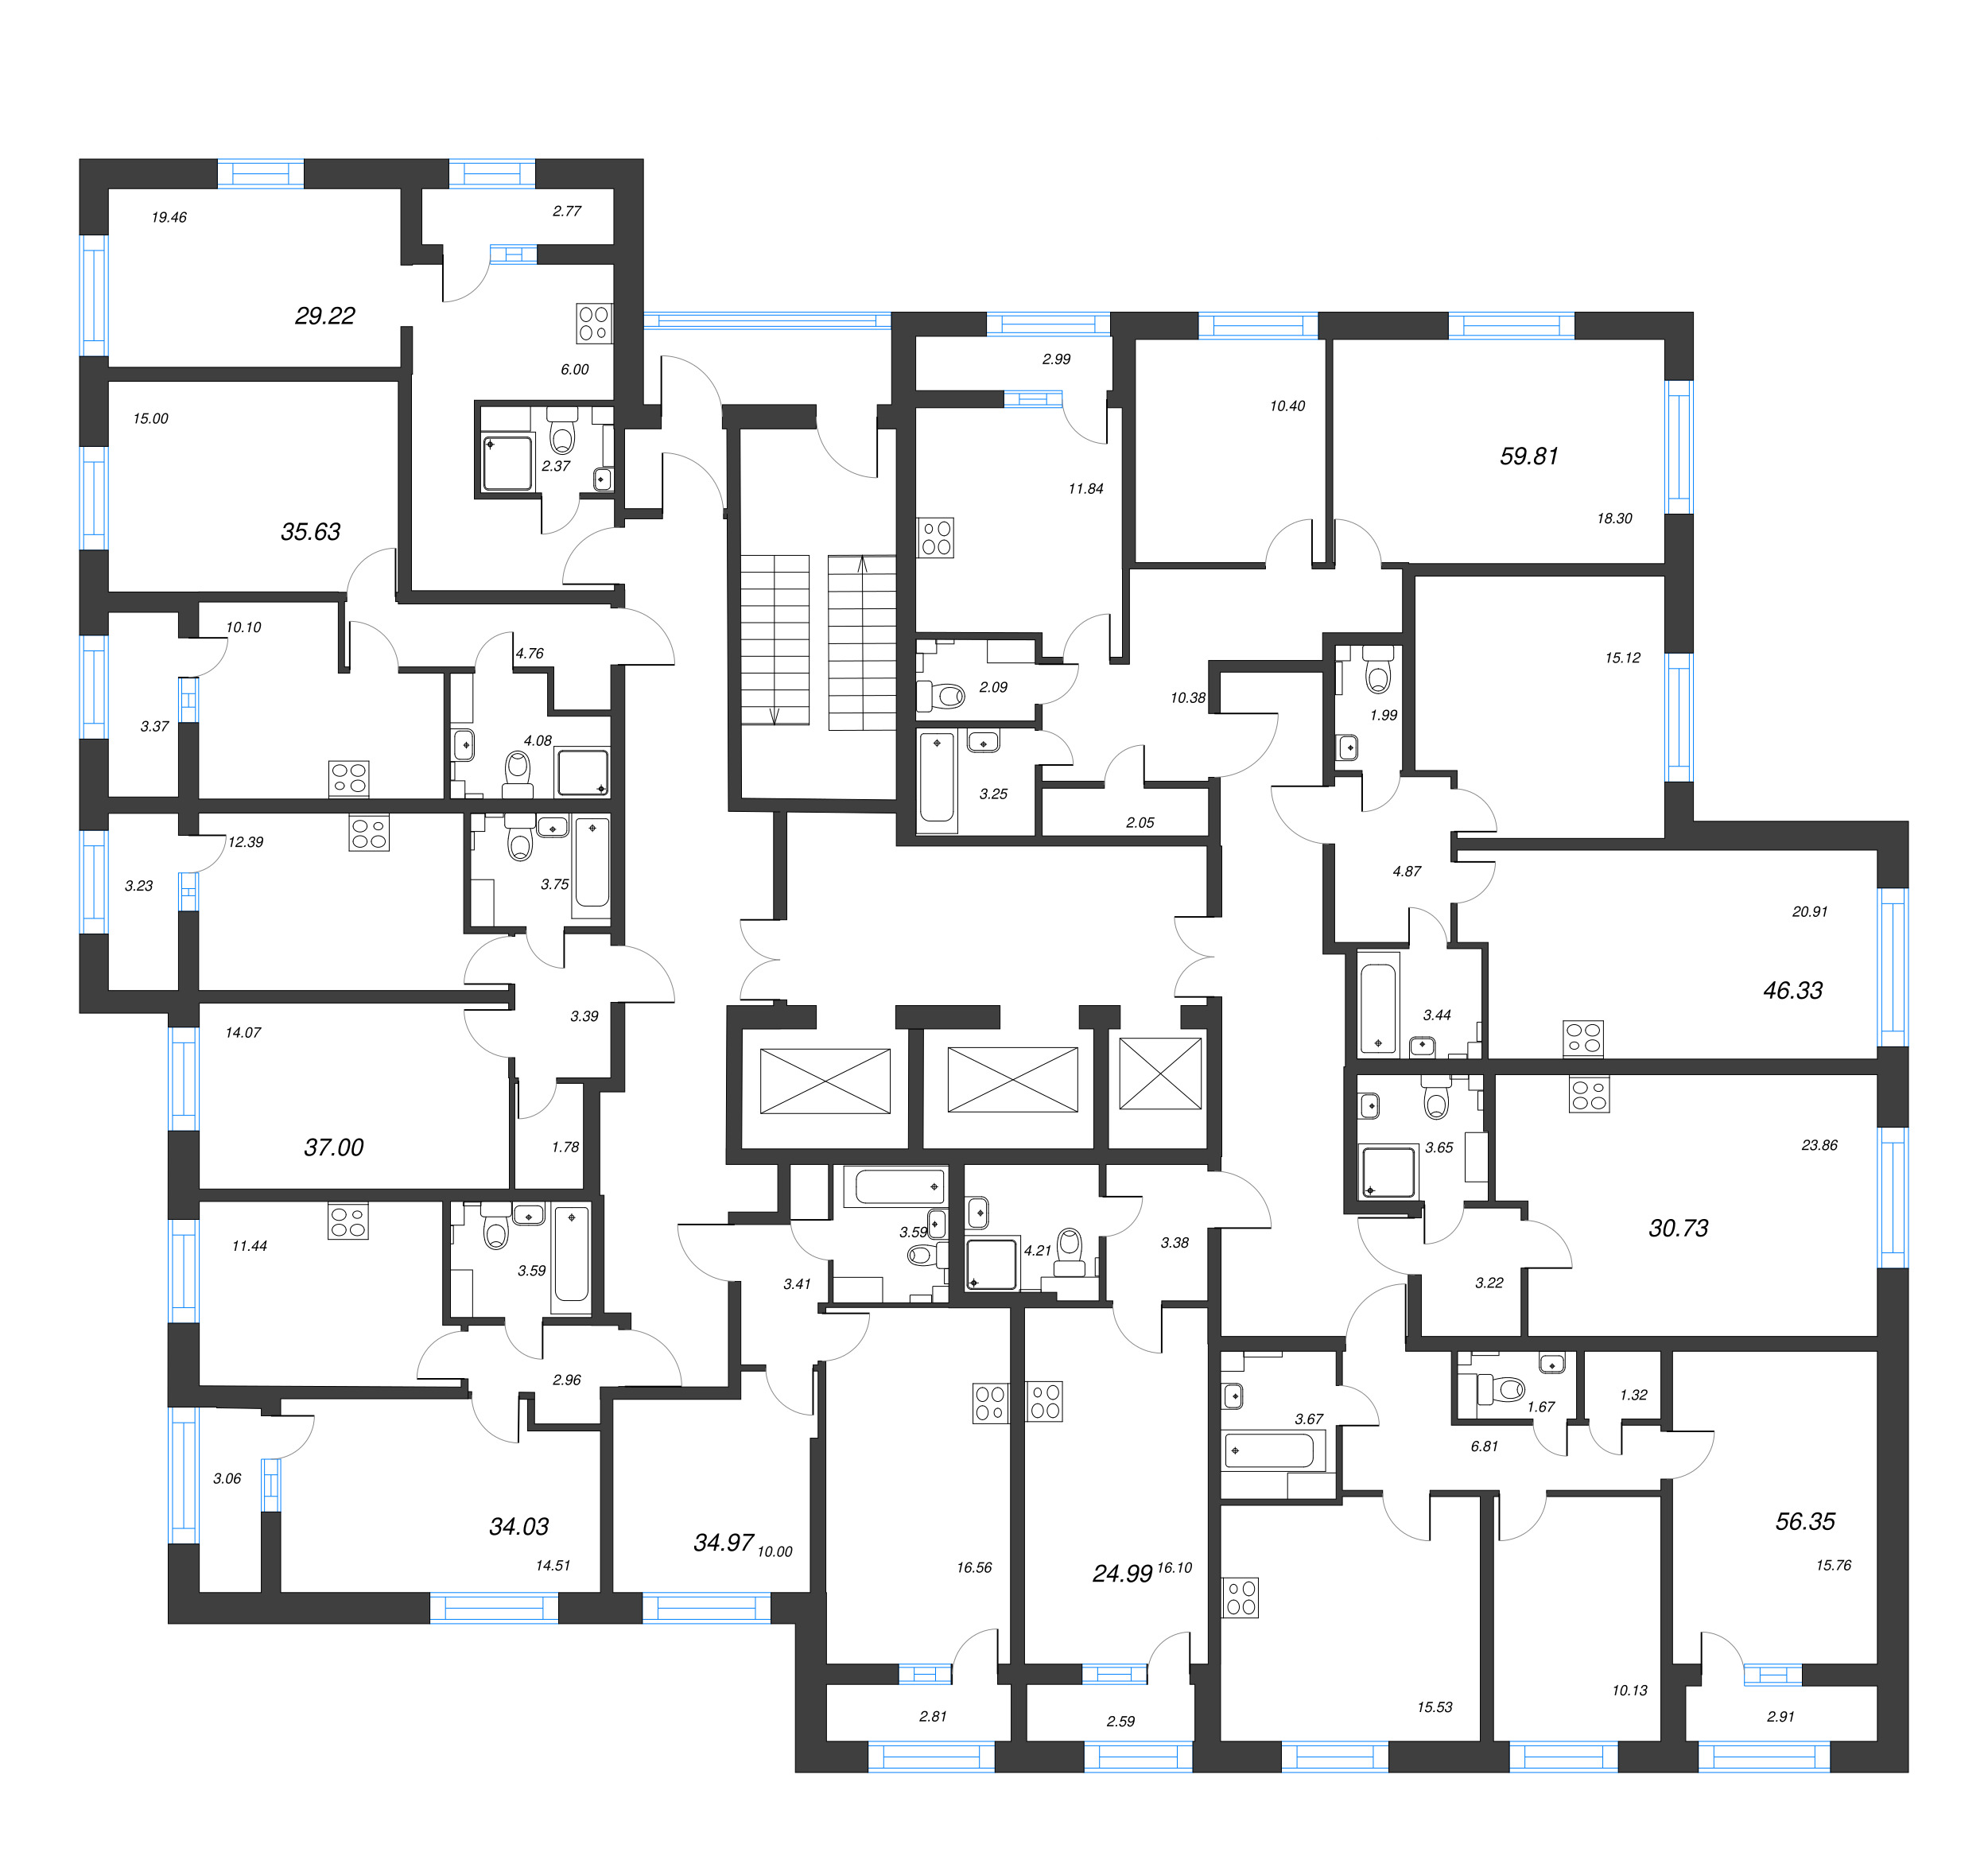 1-комнатная квартира, 34.03 м² в ЖК "БелАрт" - планировка этажа